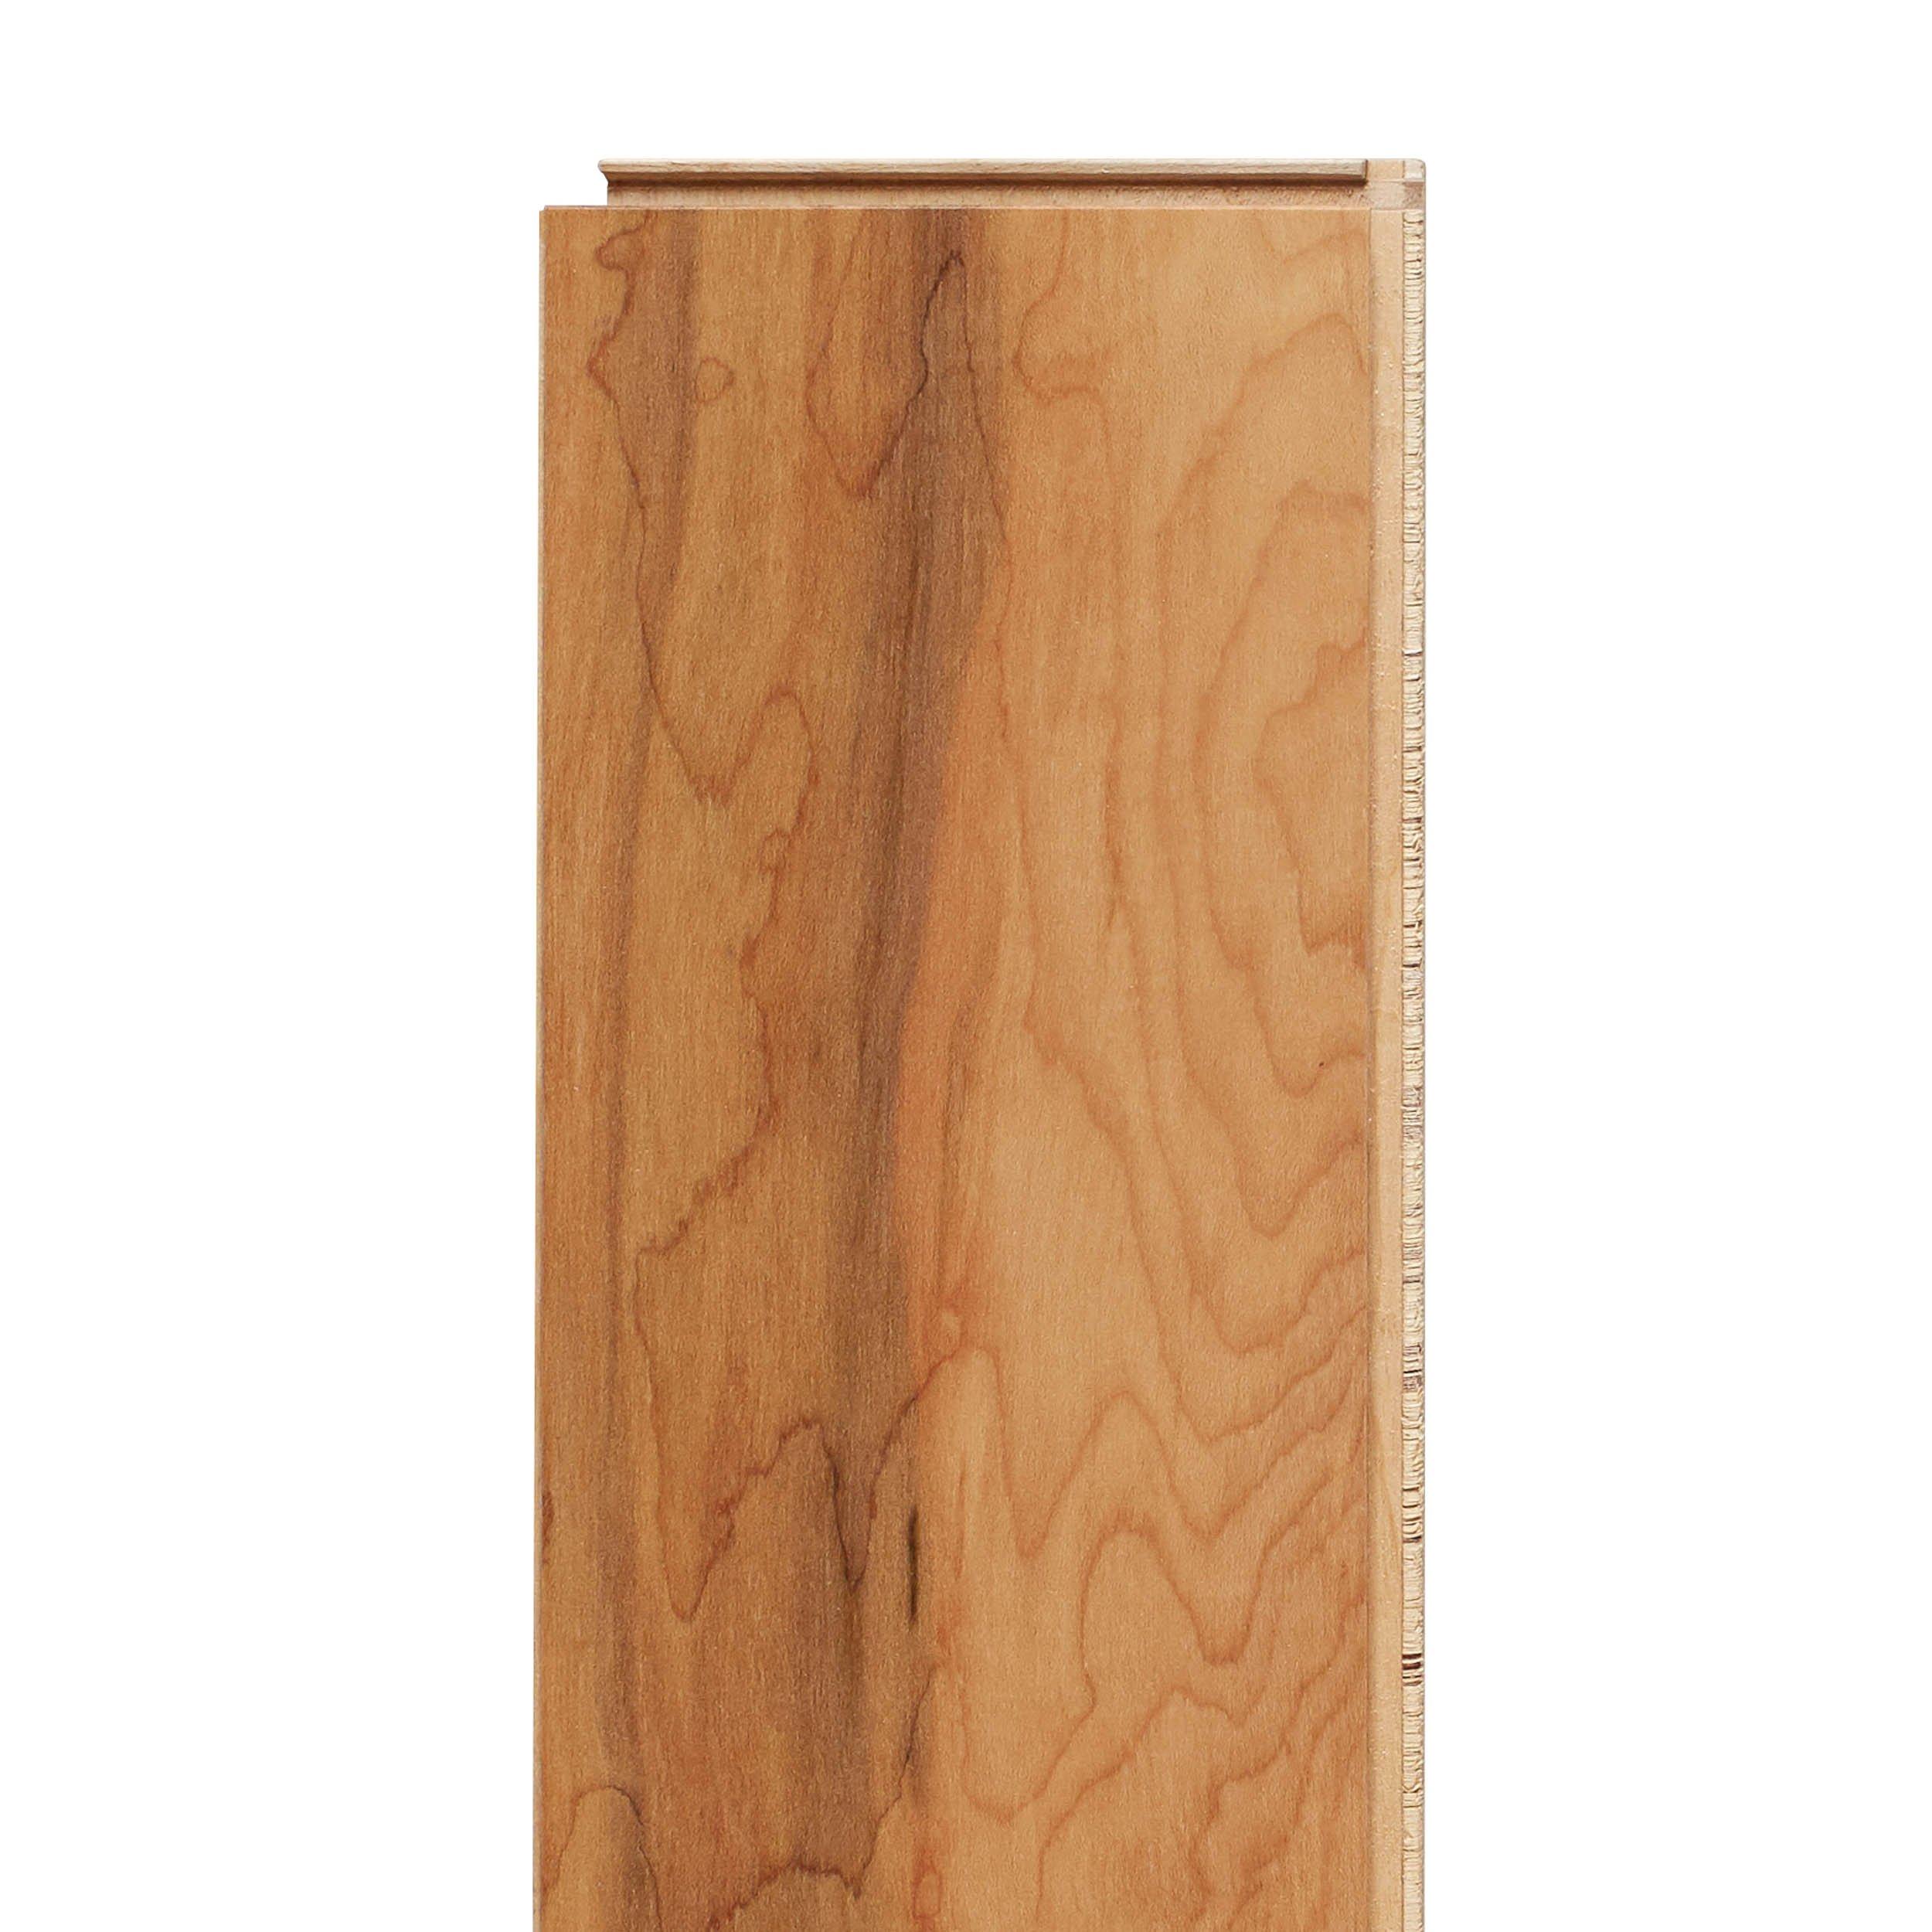 Premier Performance Maple Natural Acrylic Infused Engineered Hardwood